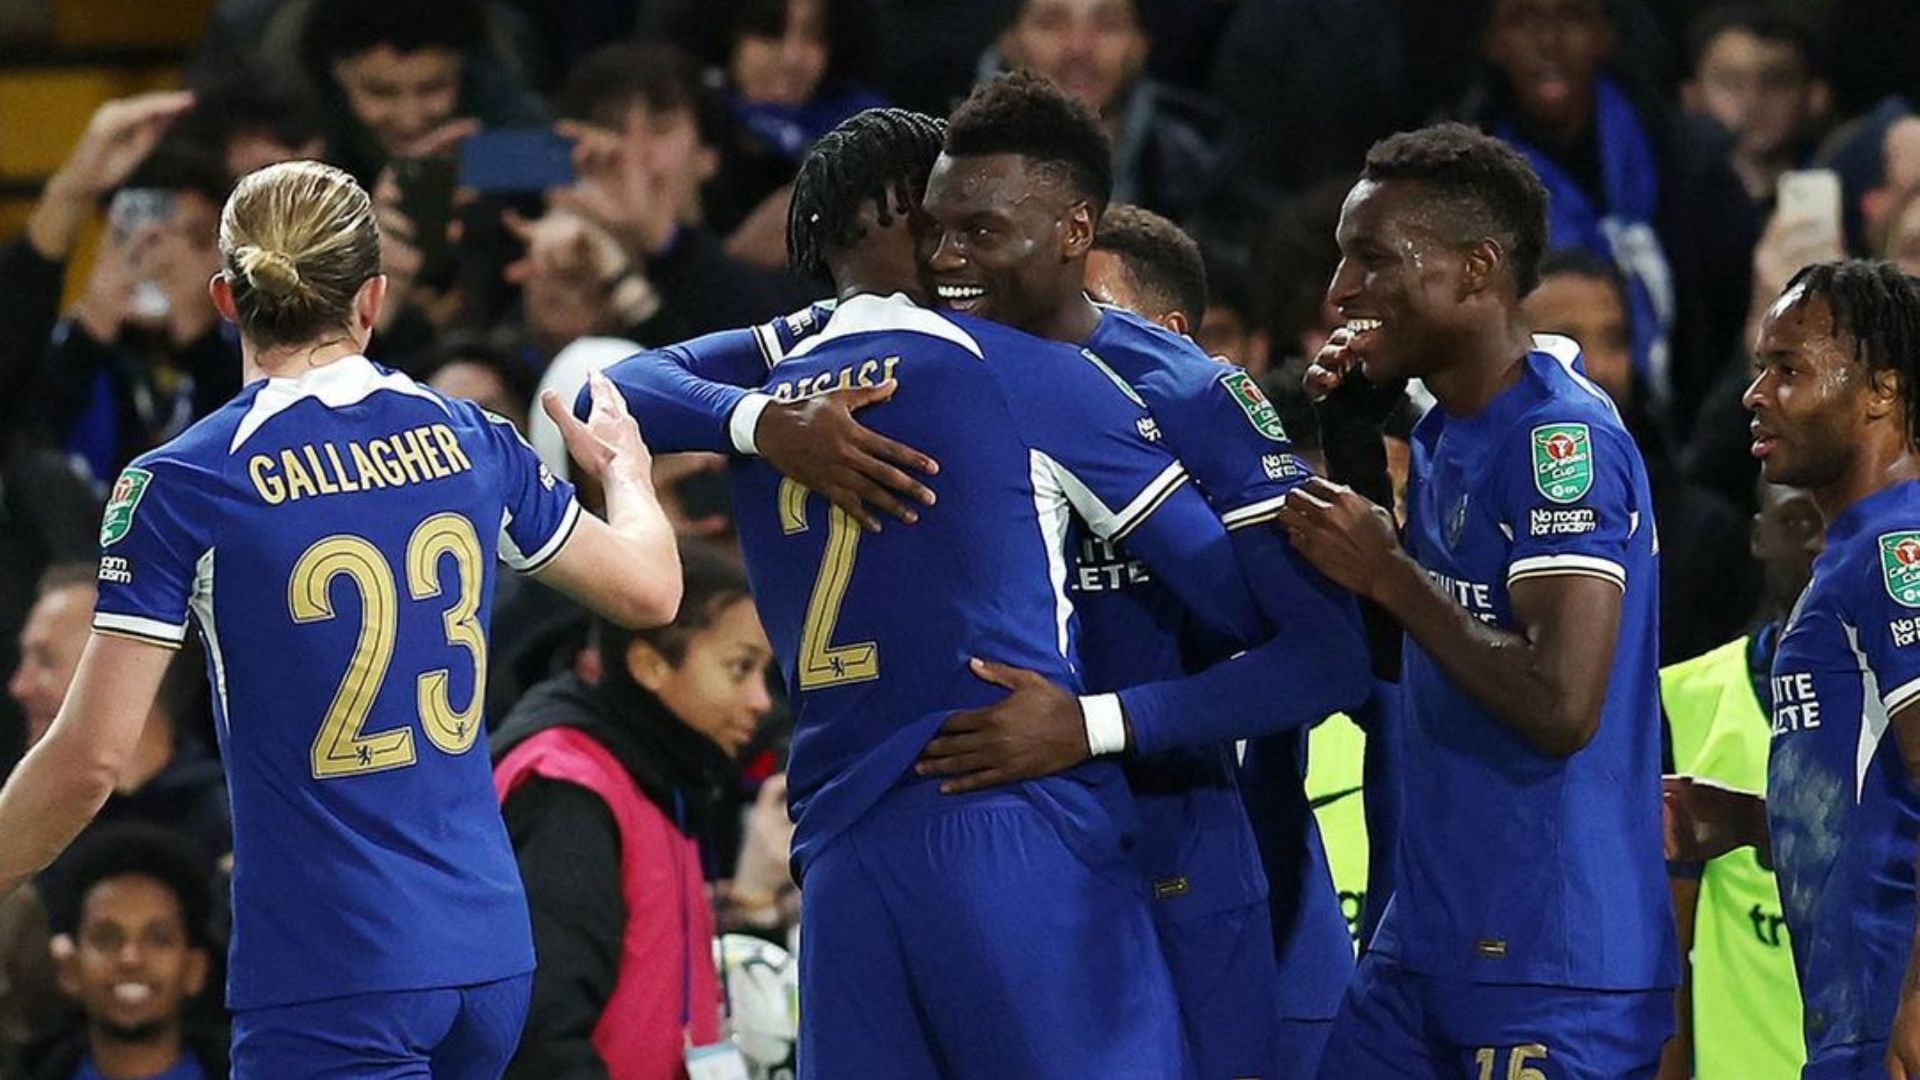 Akhirnya Chelsea Menang, The Blues Lolos ke Perempat Final Carabao Cup 